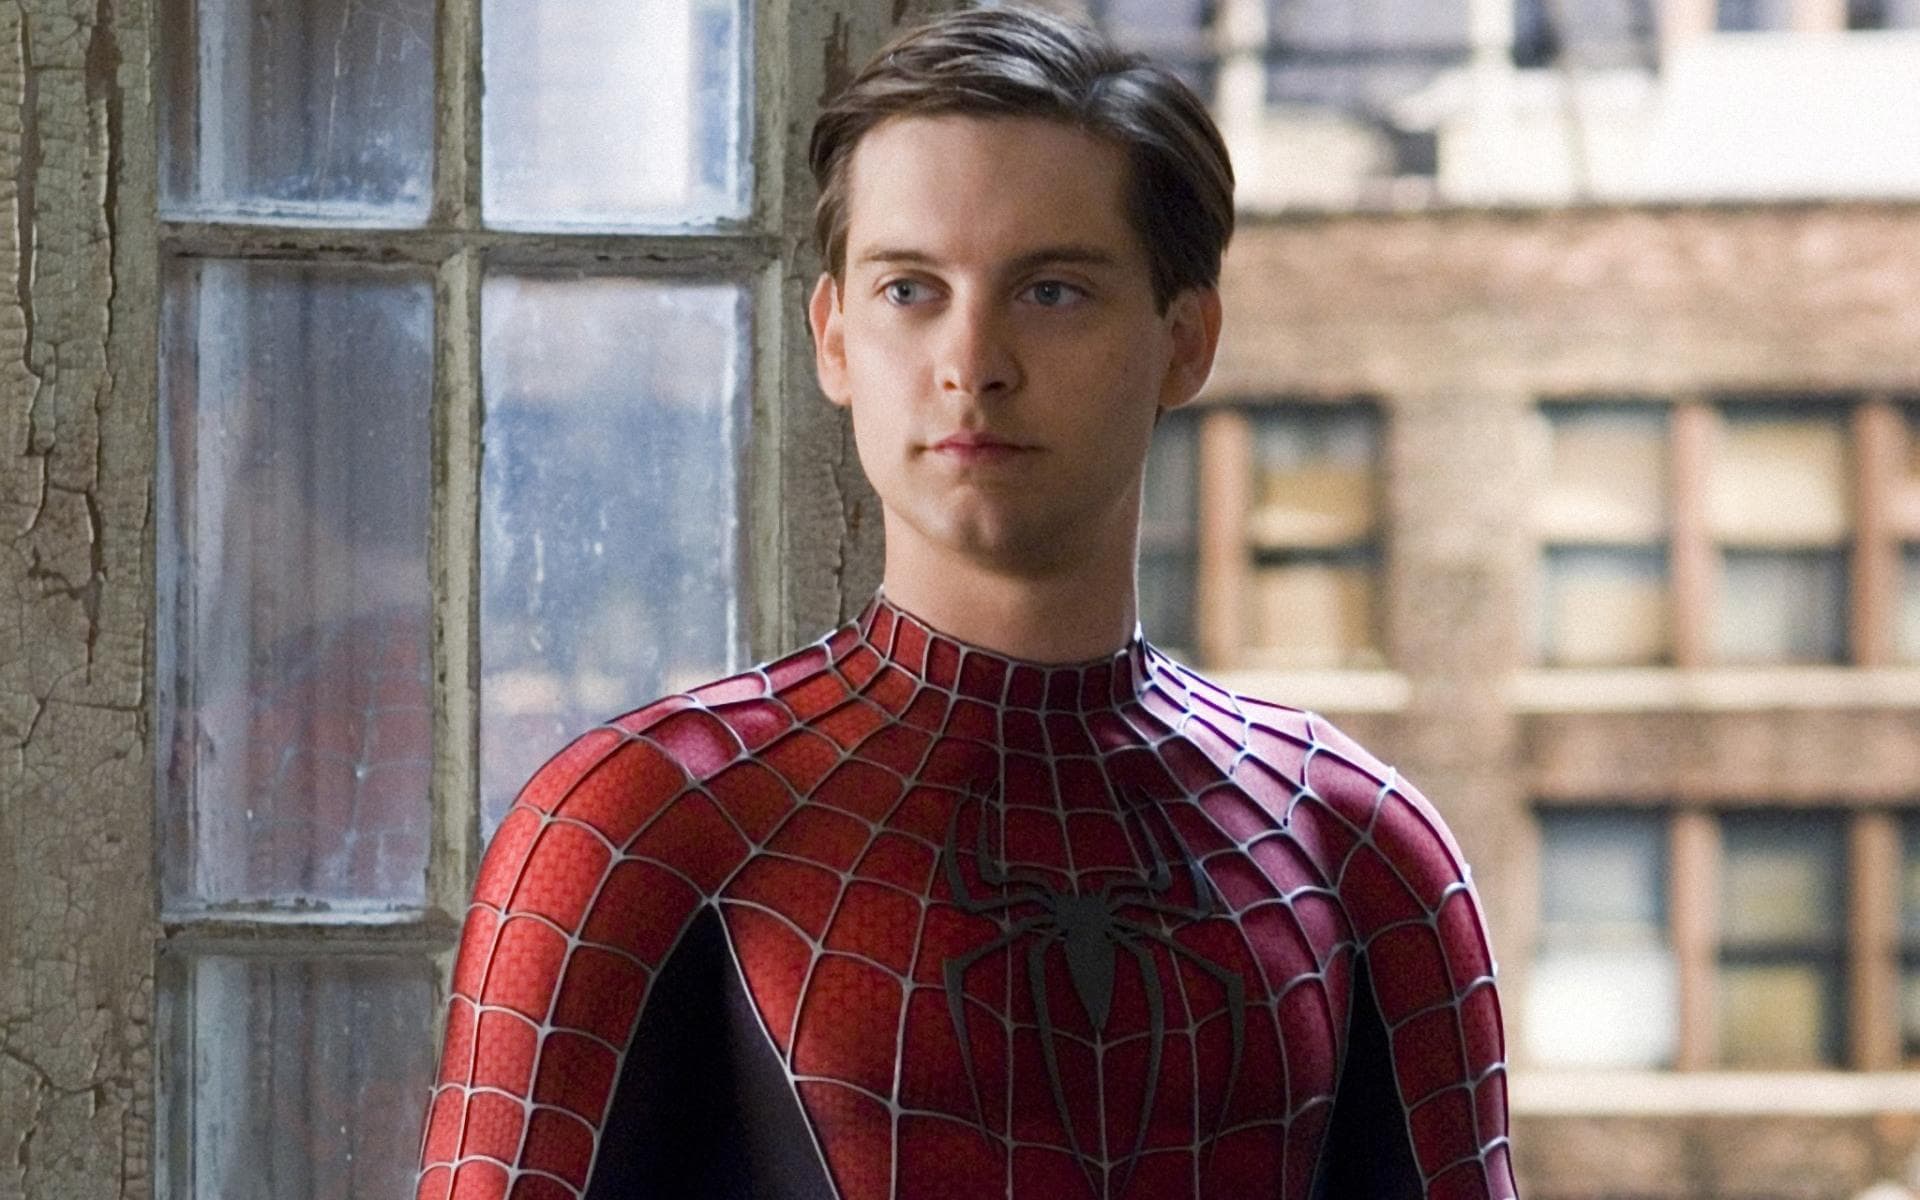 Tobey Maguire Net Worth - $75 Million, Spiderman's True Identity